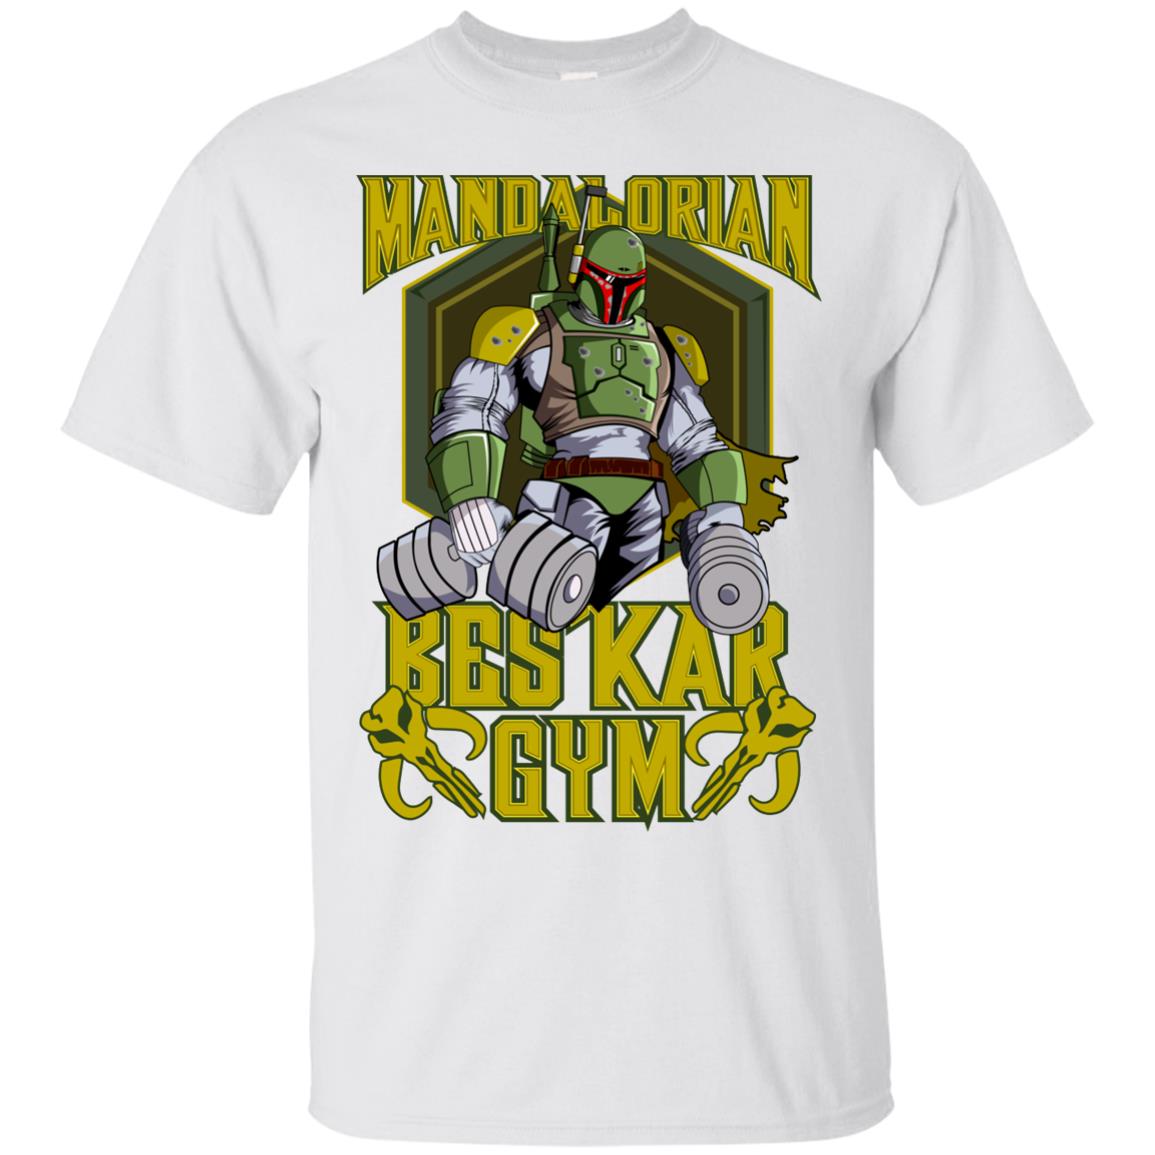 Mandalorian Iron  Gym Graphic t-shirt